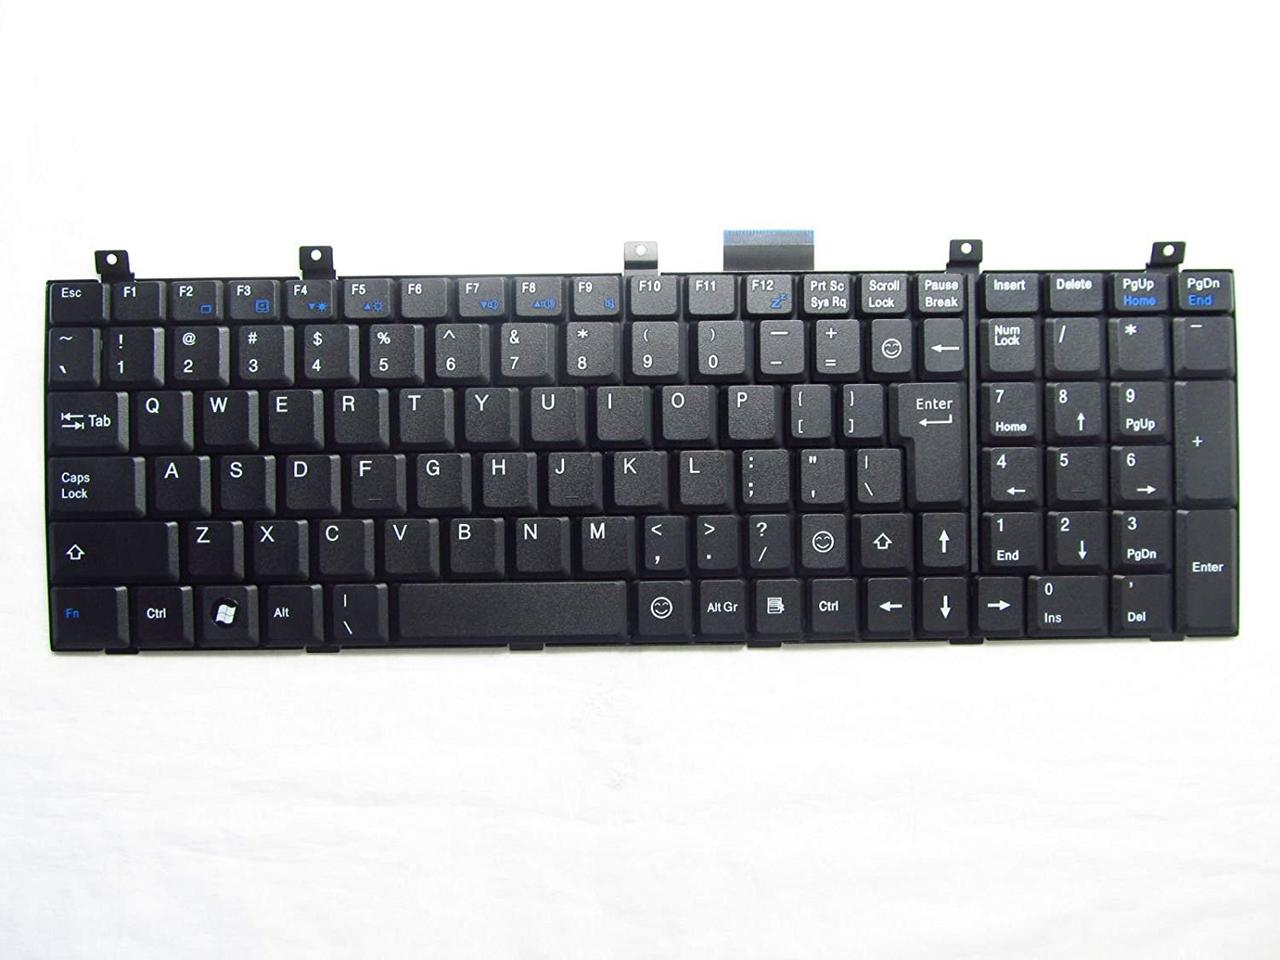 Клавиатура для ноутбука MSI CR700